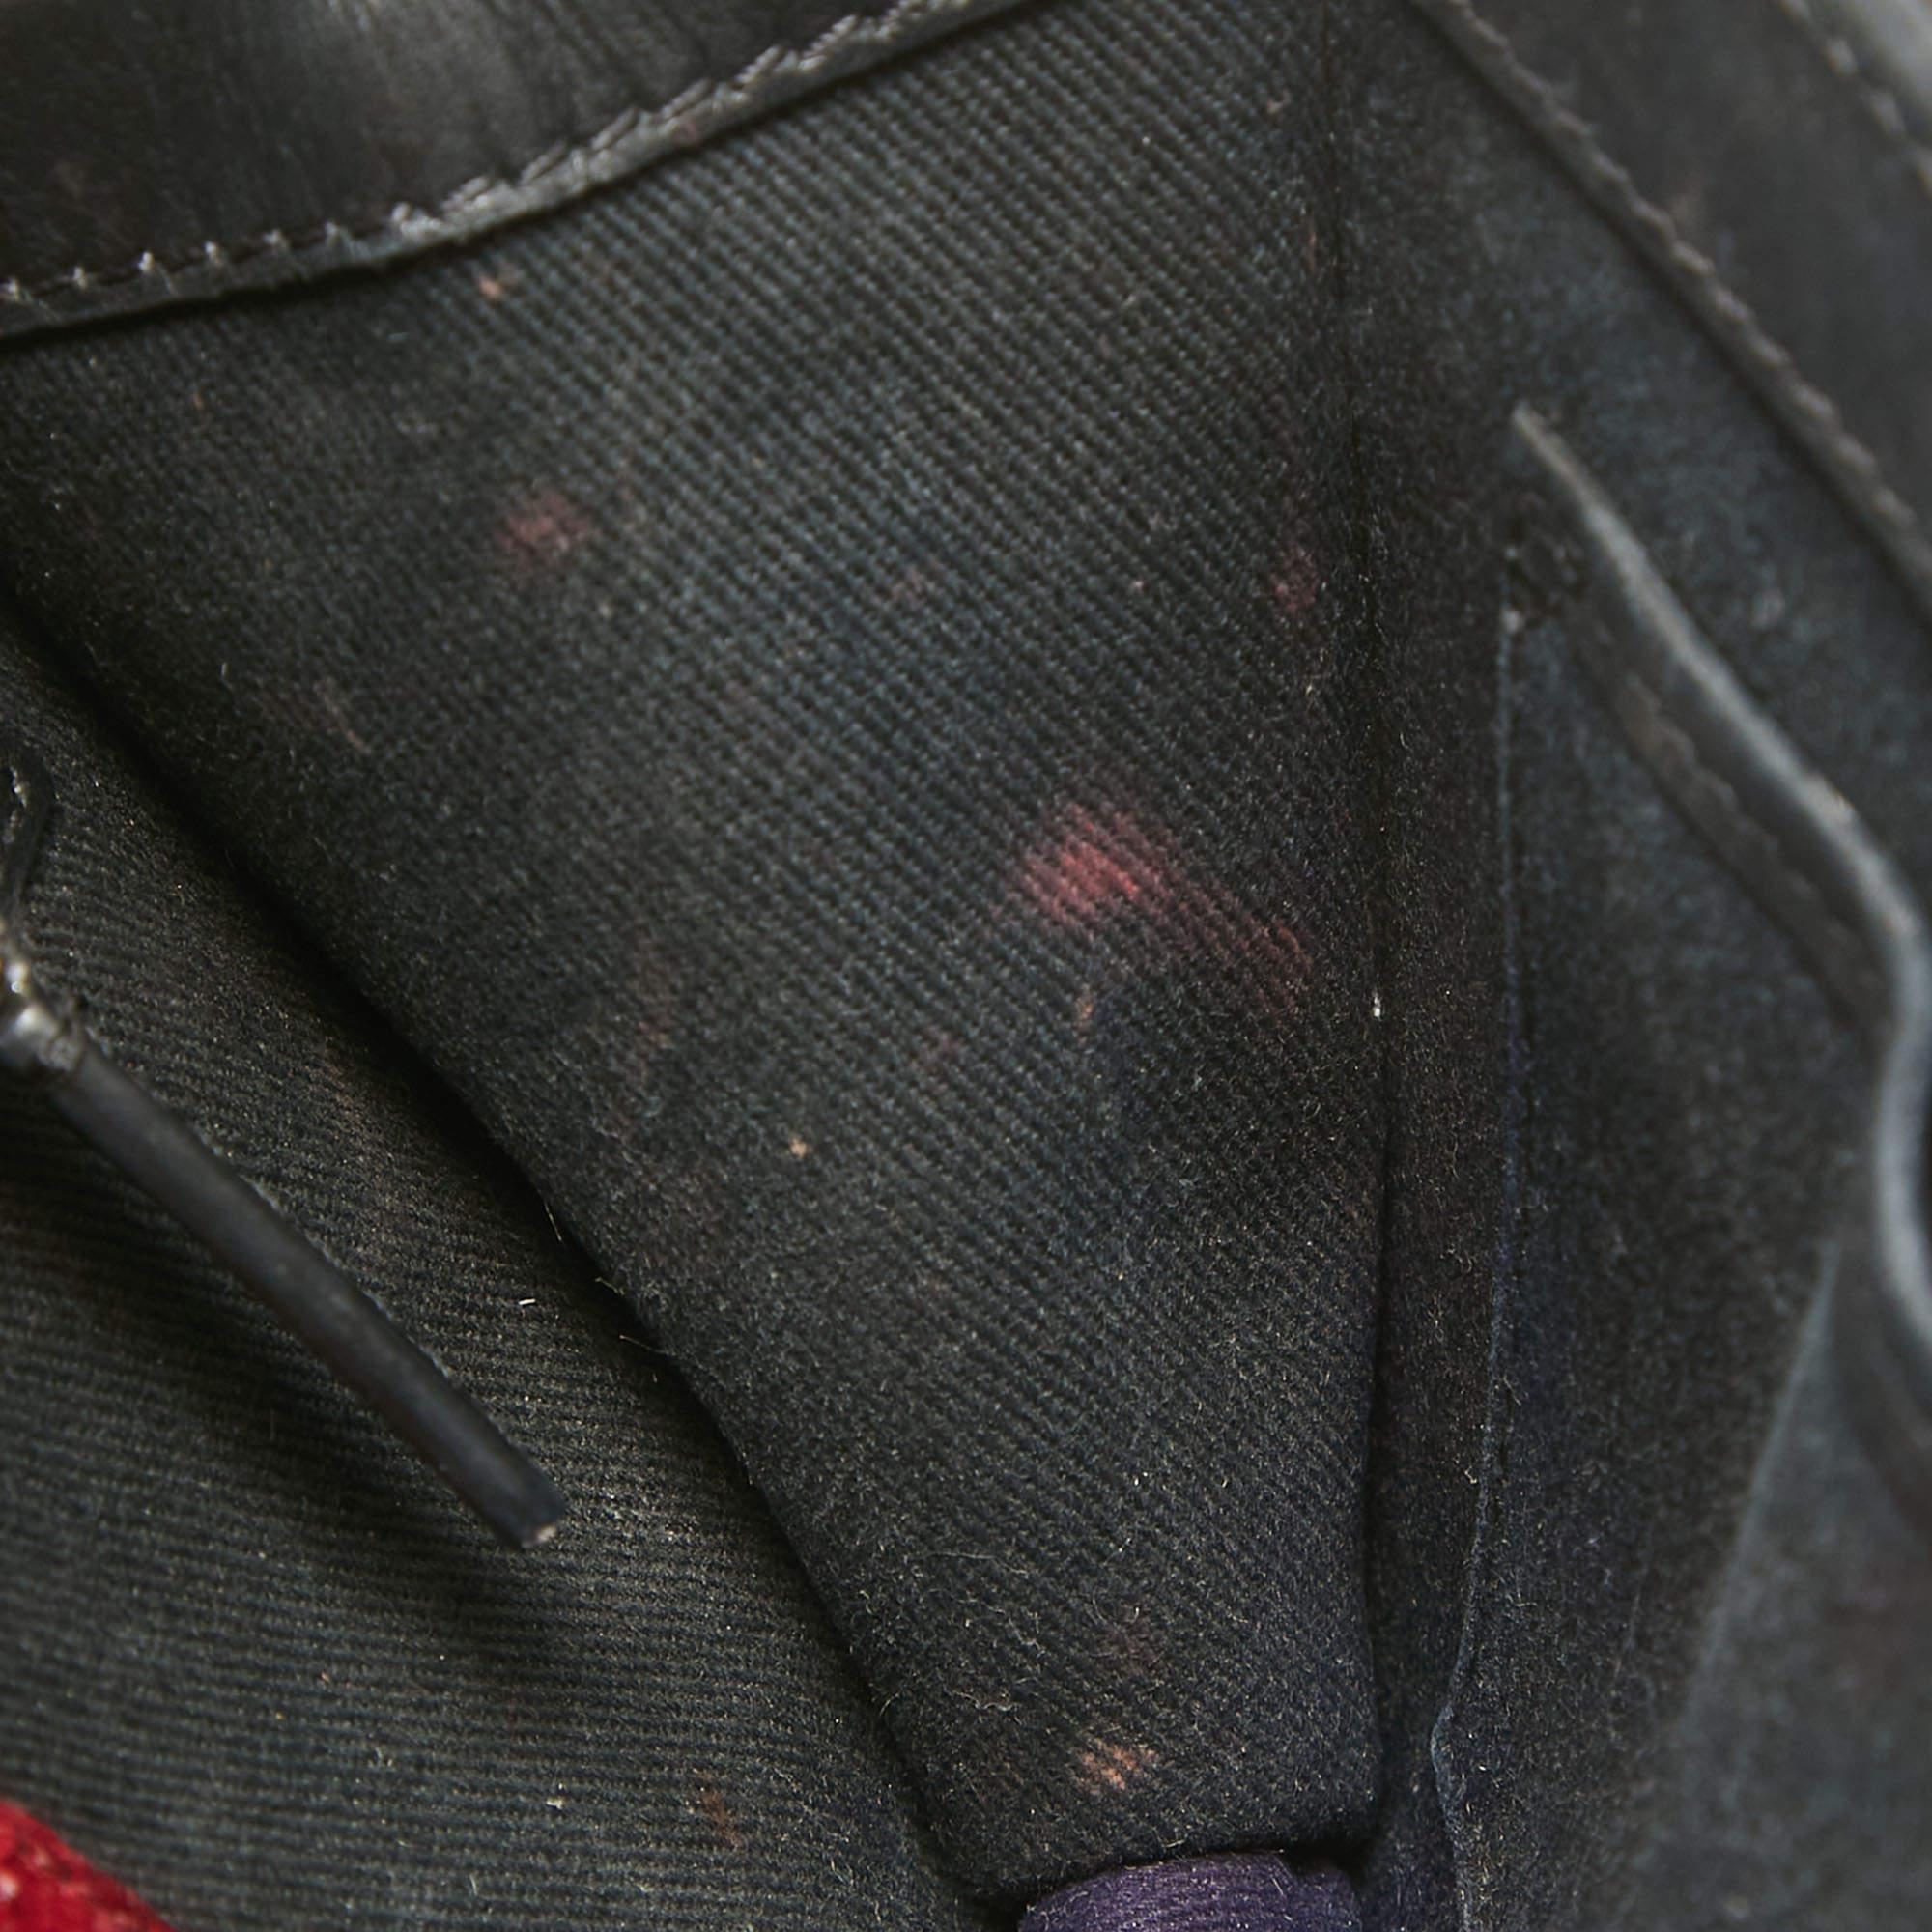 Valentino Black Leather Small Rockstud Glam Lock Flap Bag 10